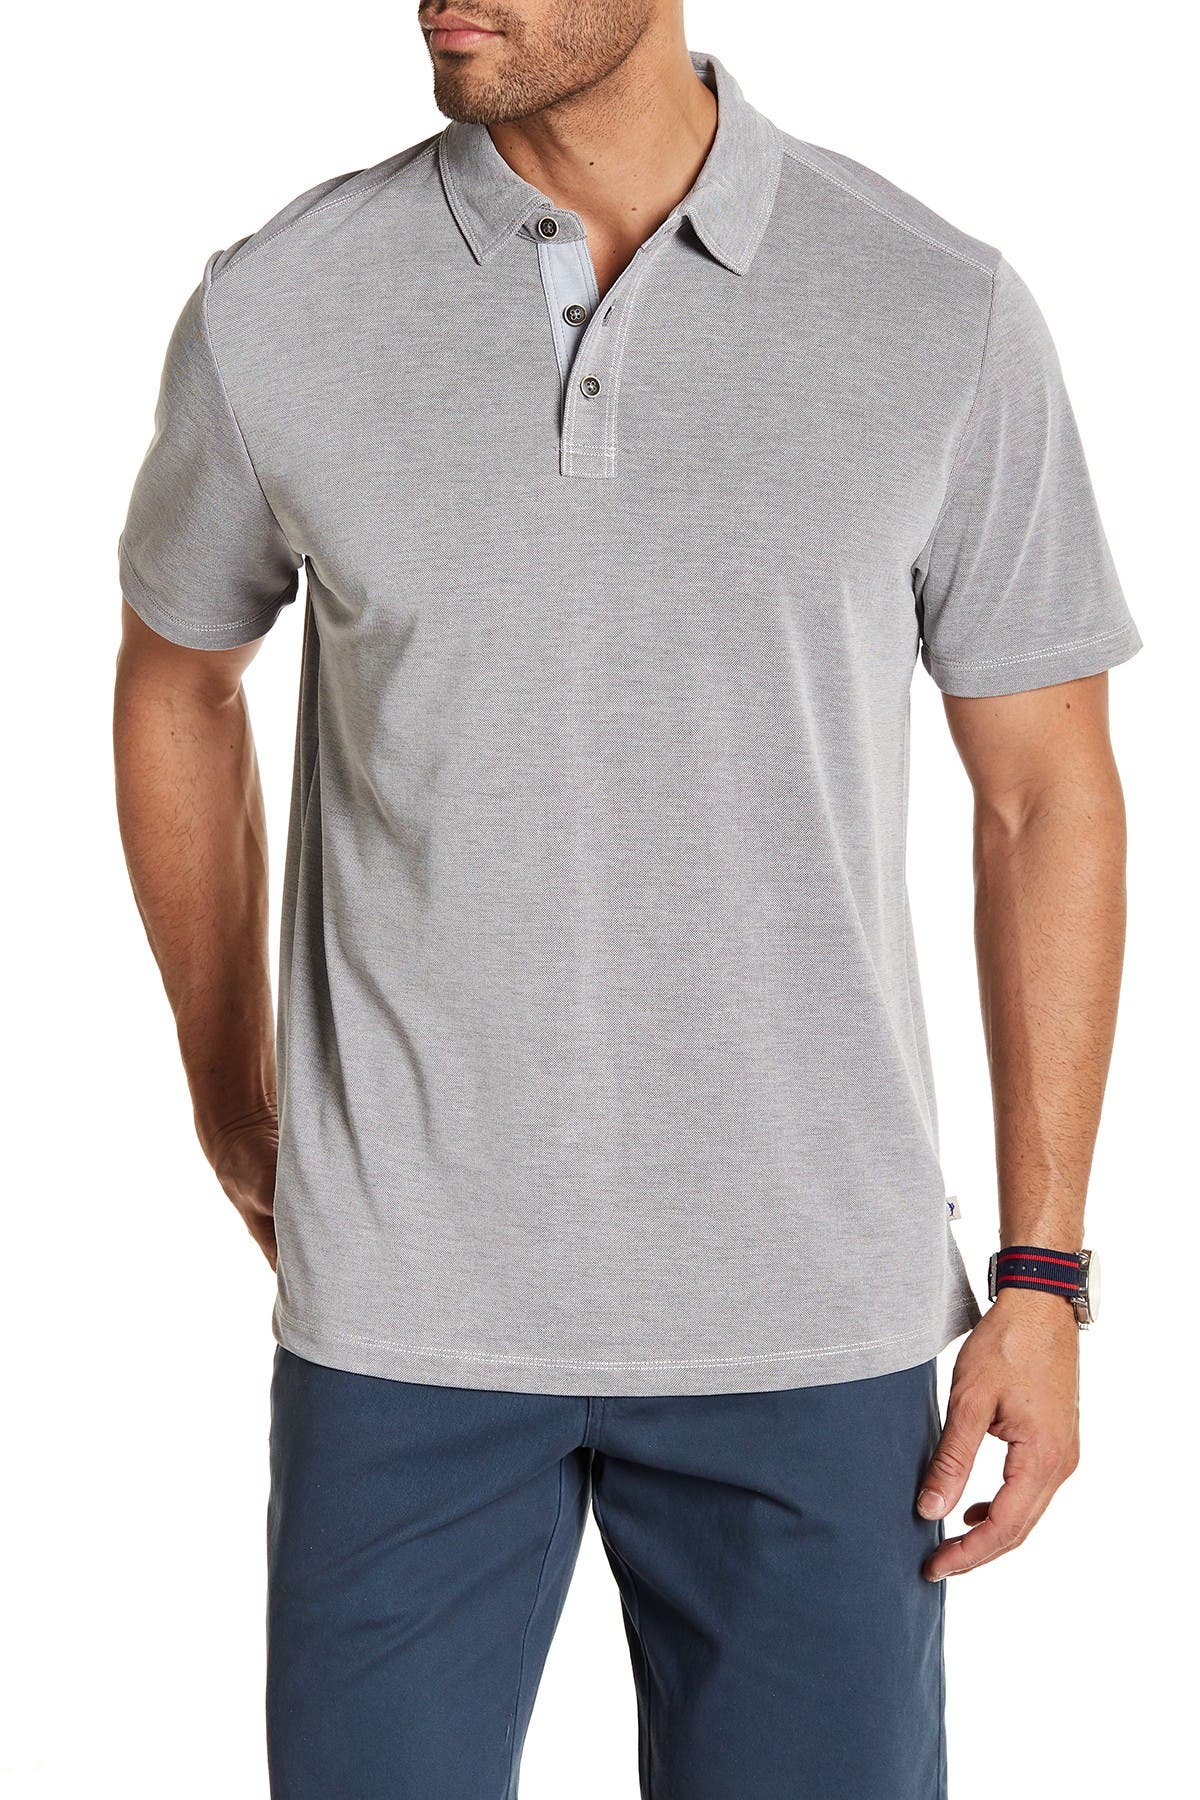 Tommy Bahama Shell-Tastic Short Sleeve Button Down Shirt 